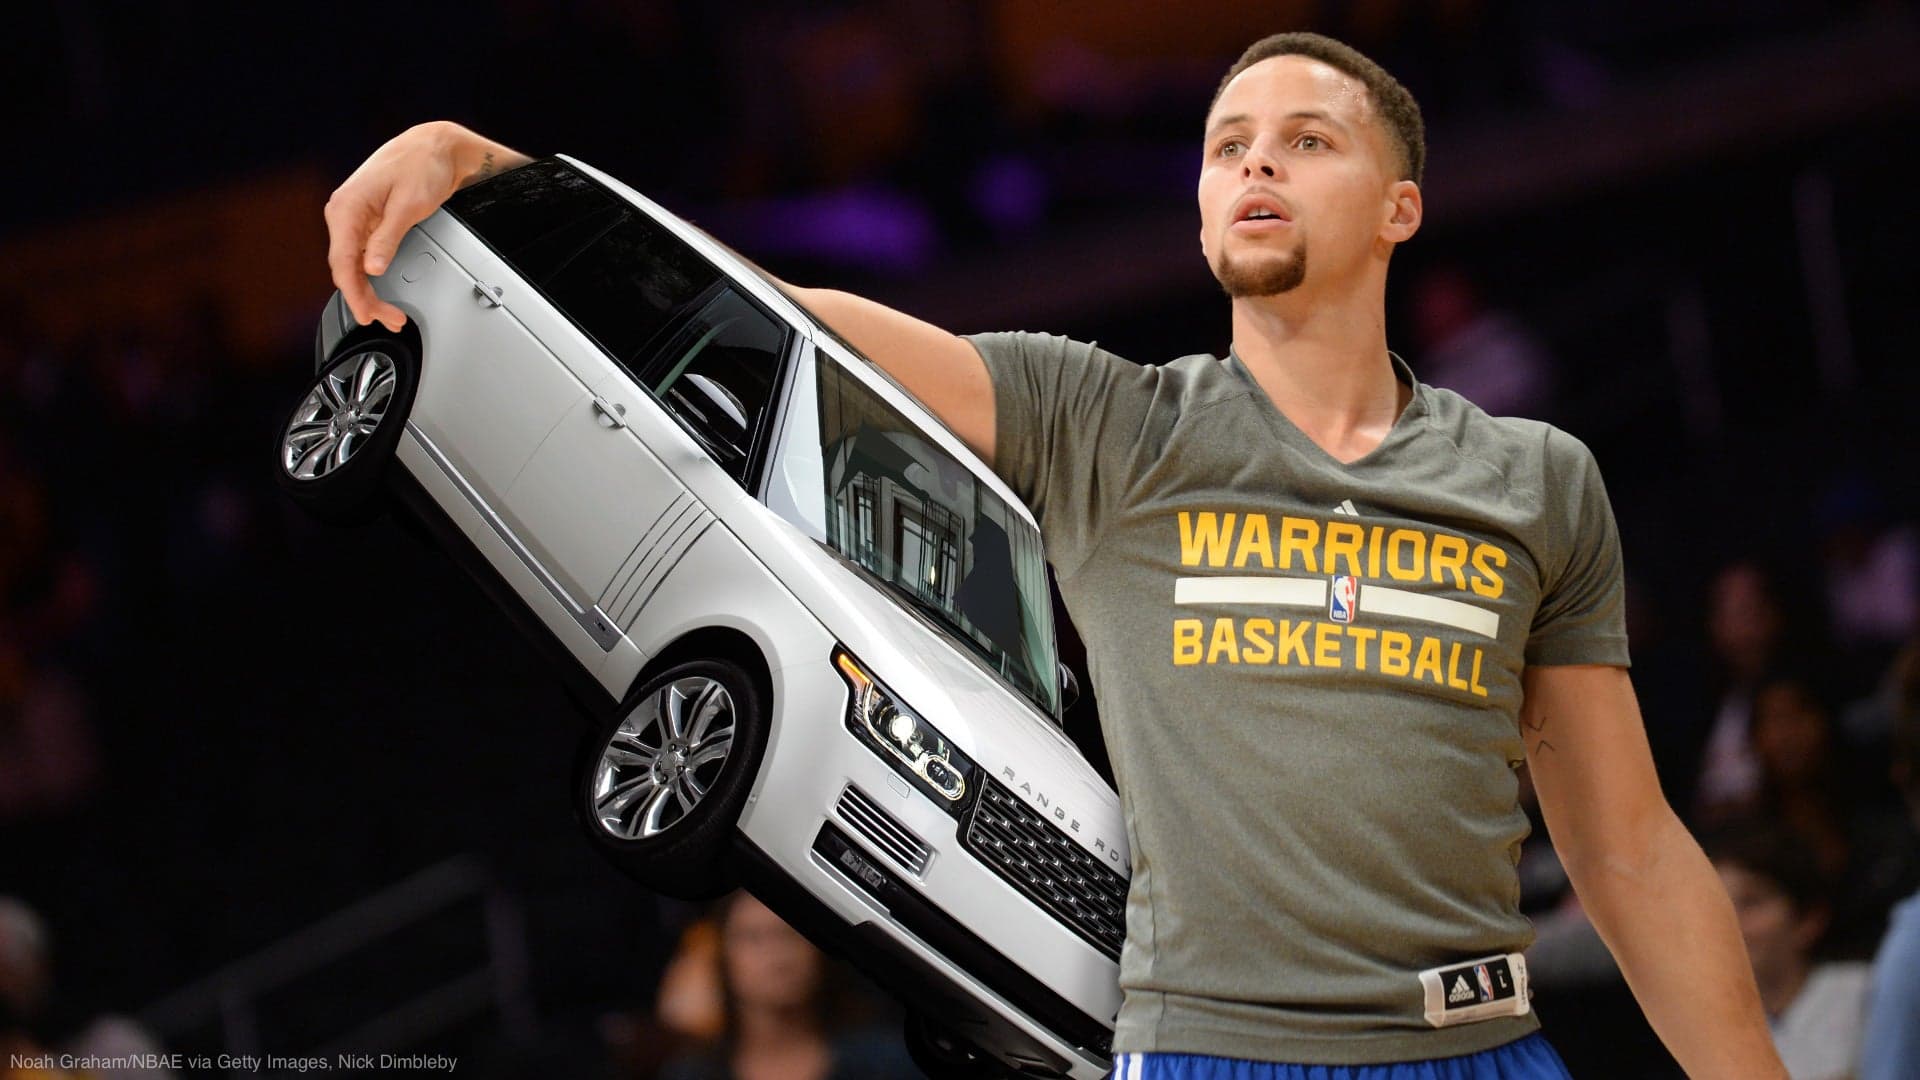 NBA Star Stephen Curry Crushes It on Asphalt, Too